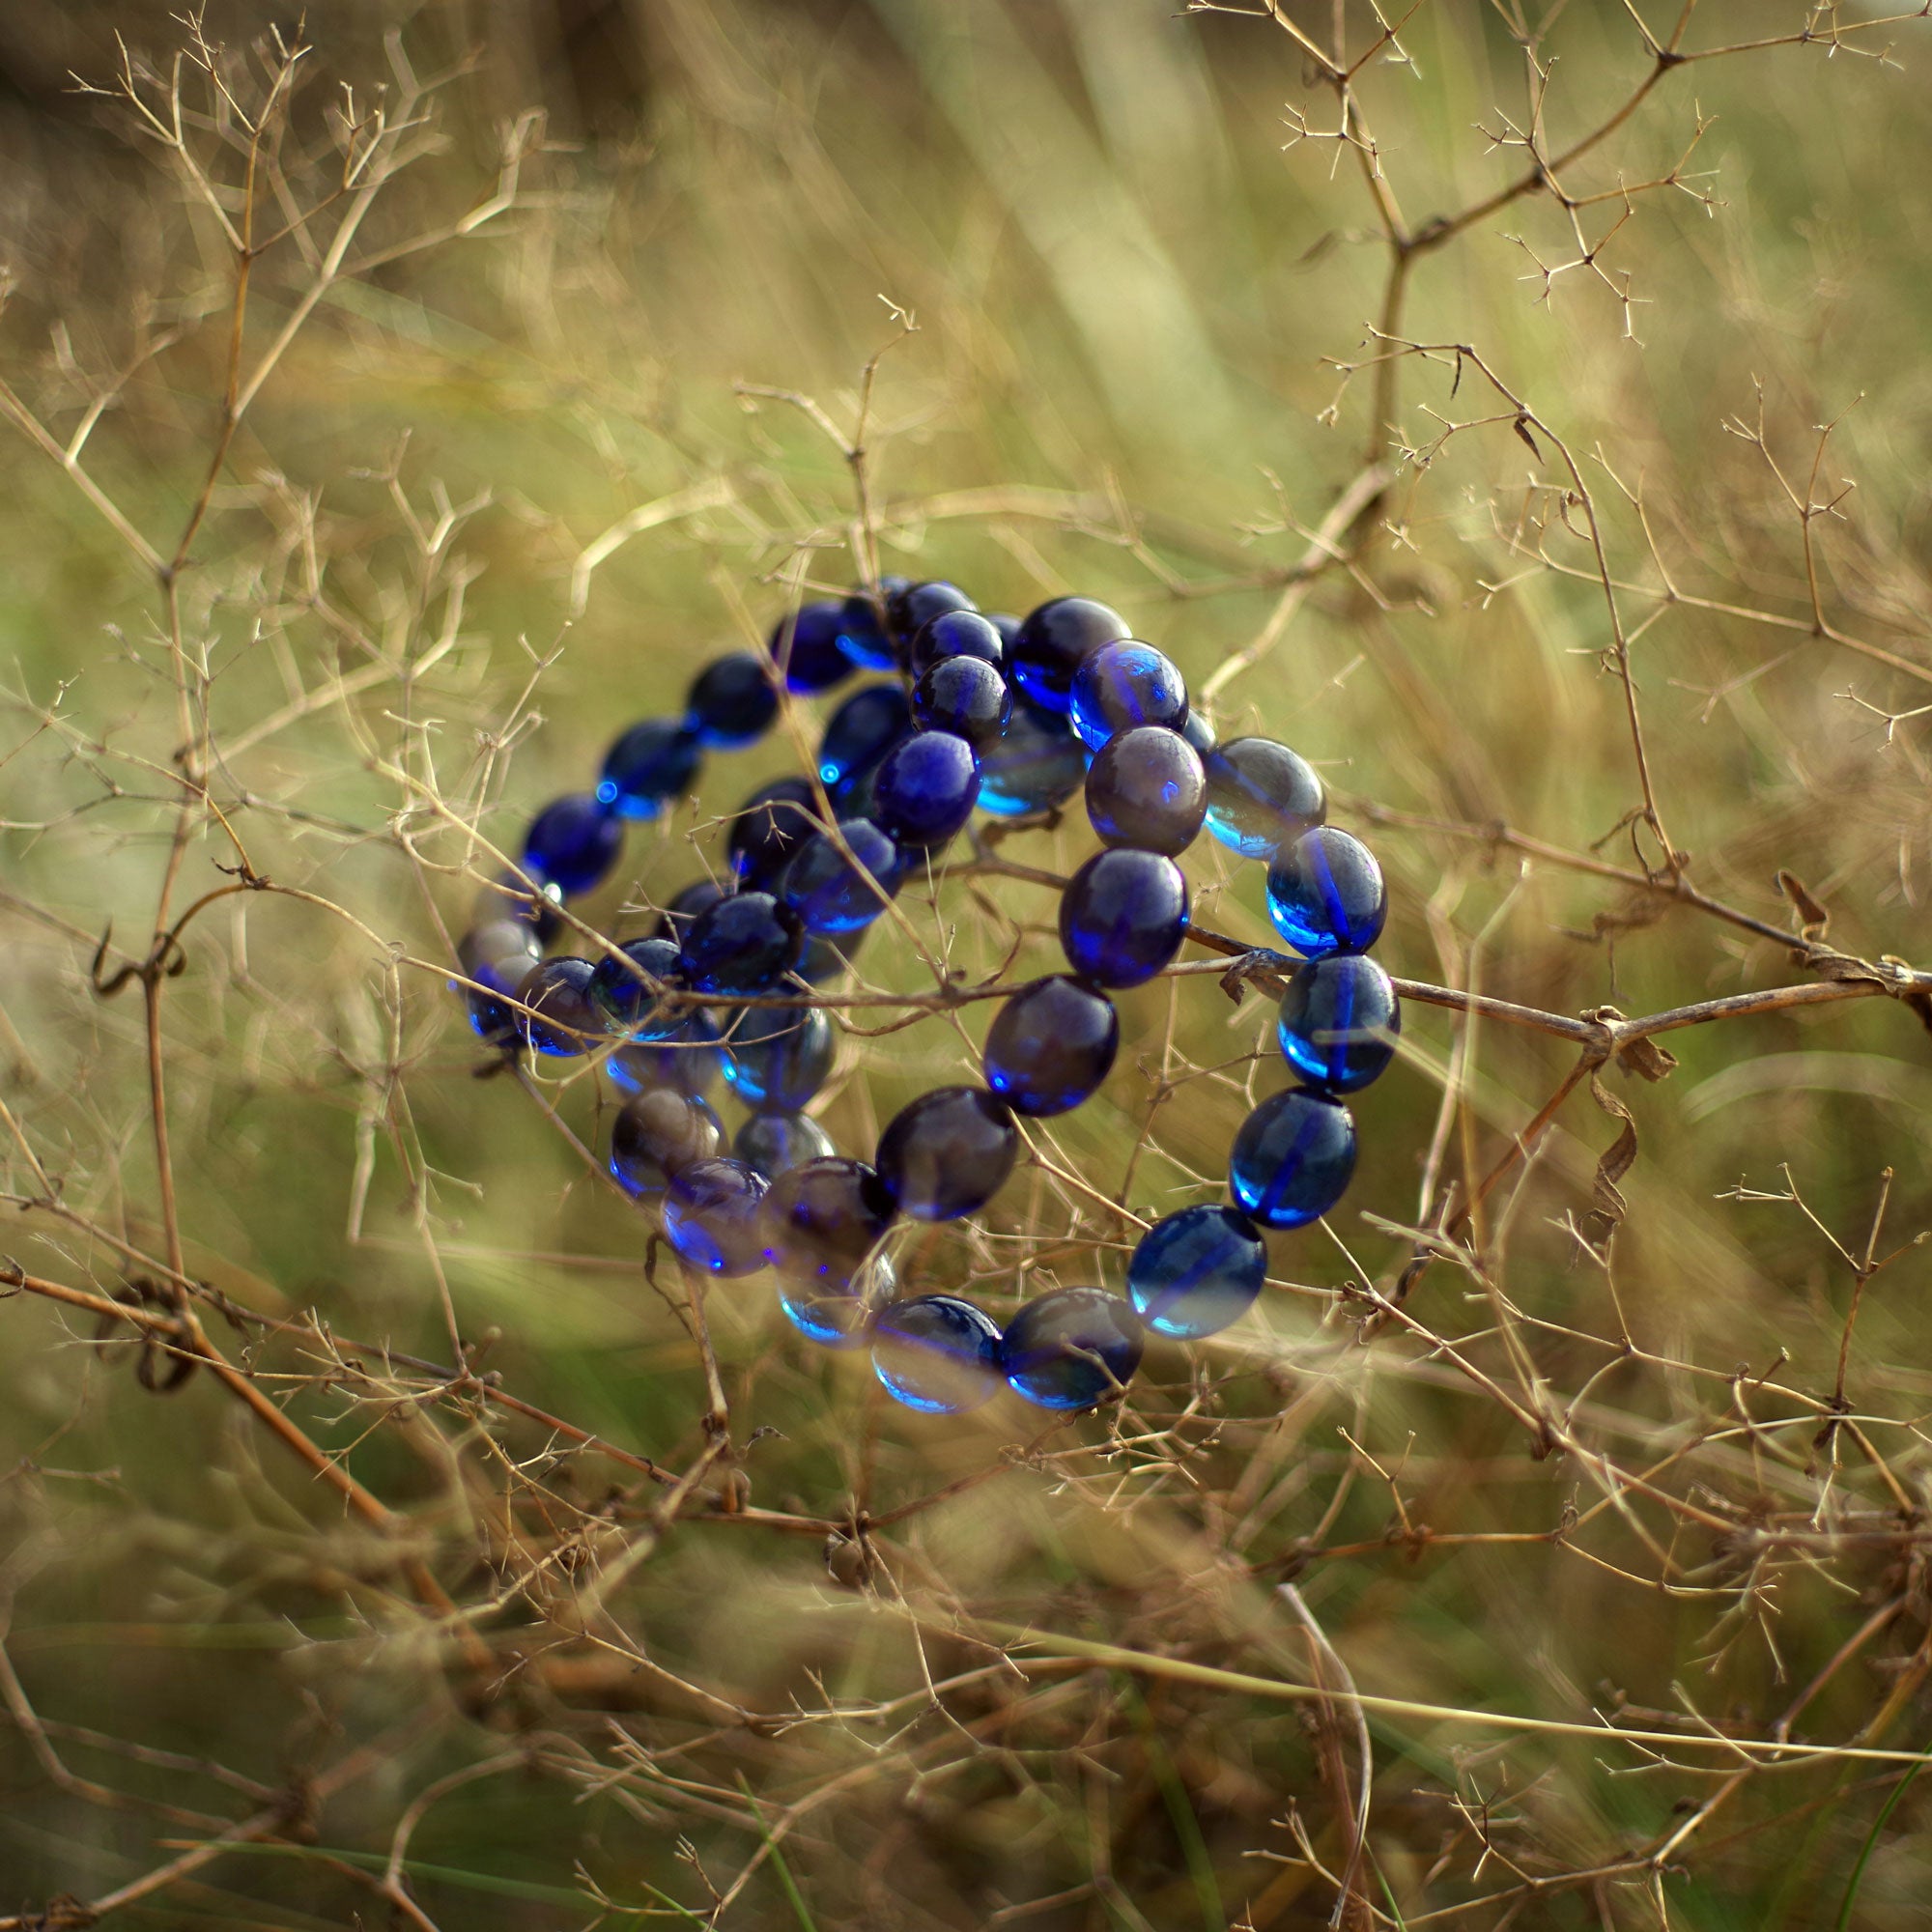 Blue Amber Olive Beads Stretch Bracelet